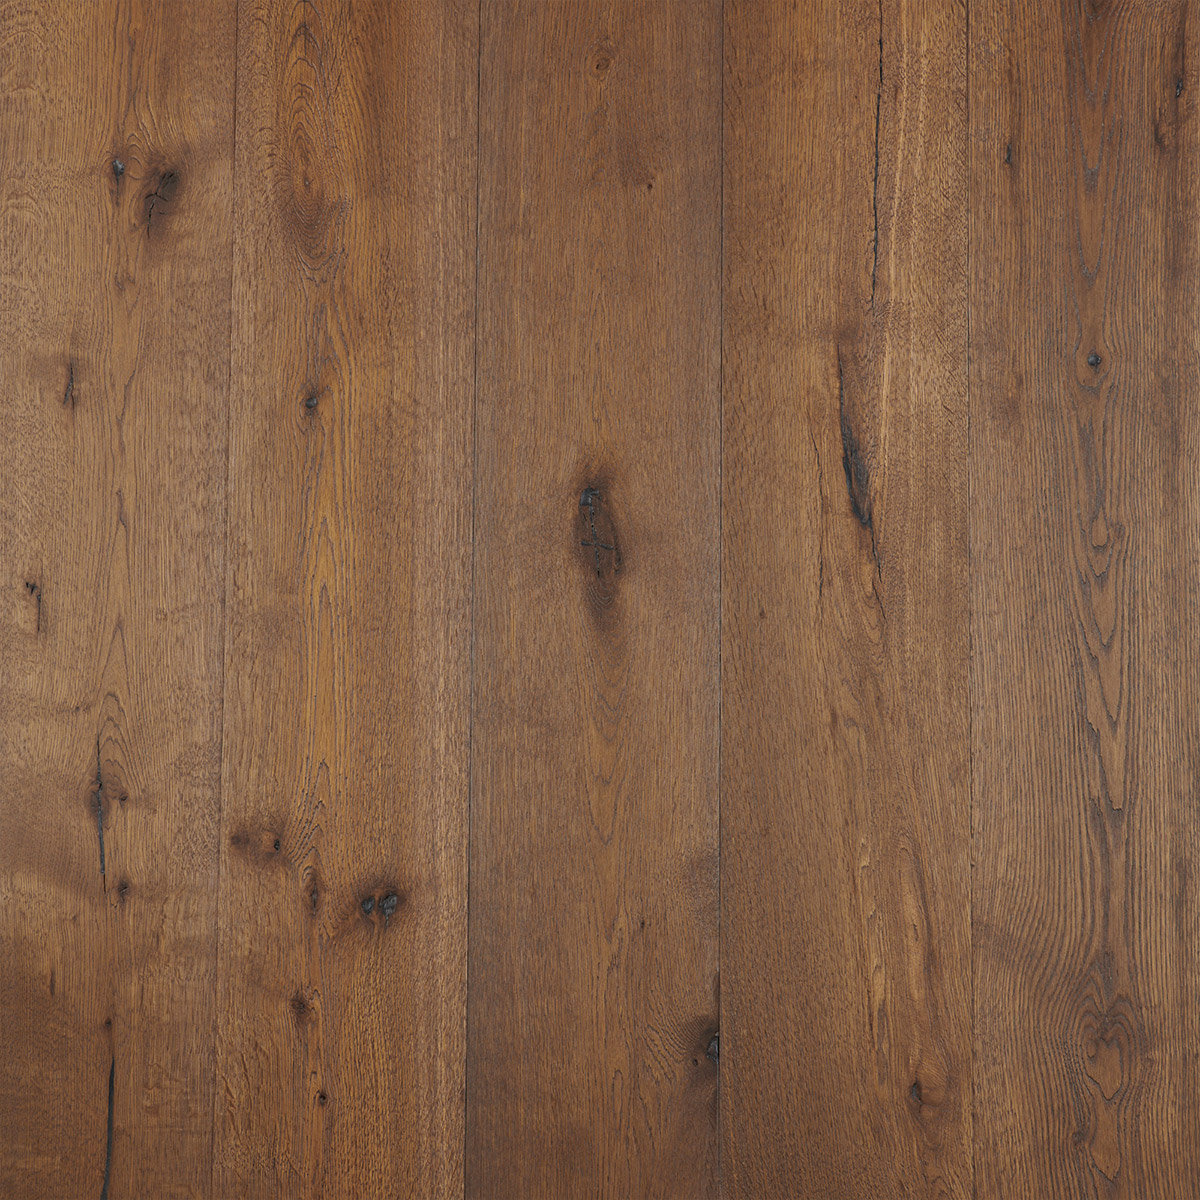 dark hardwood timber flooring